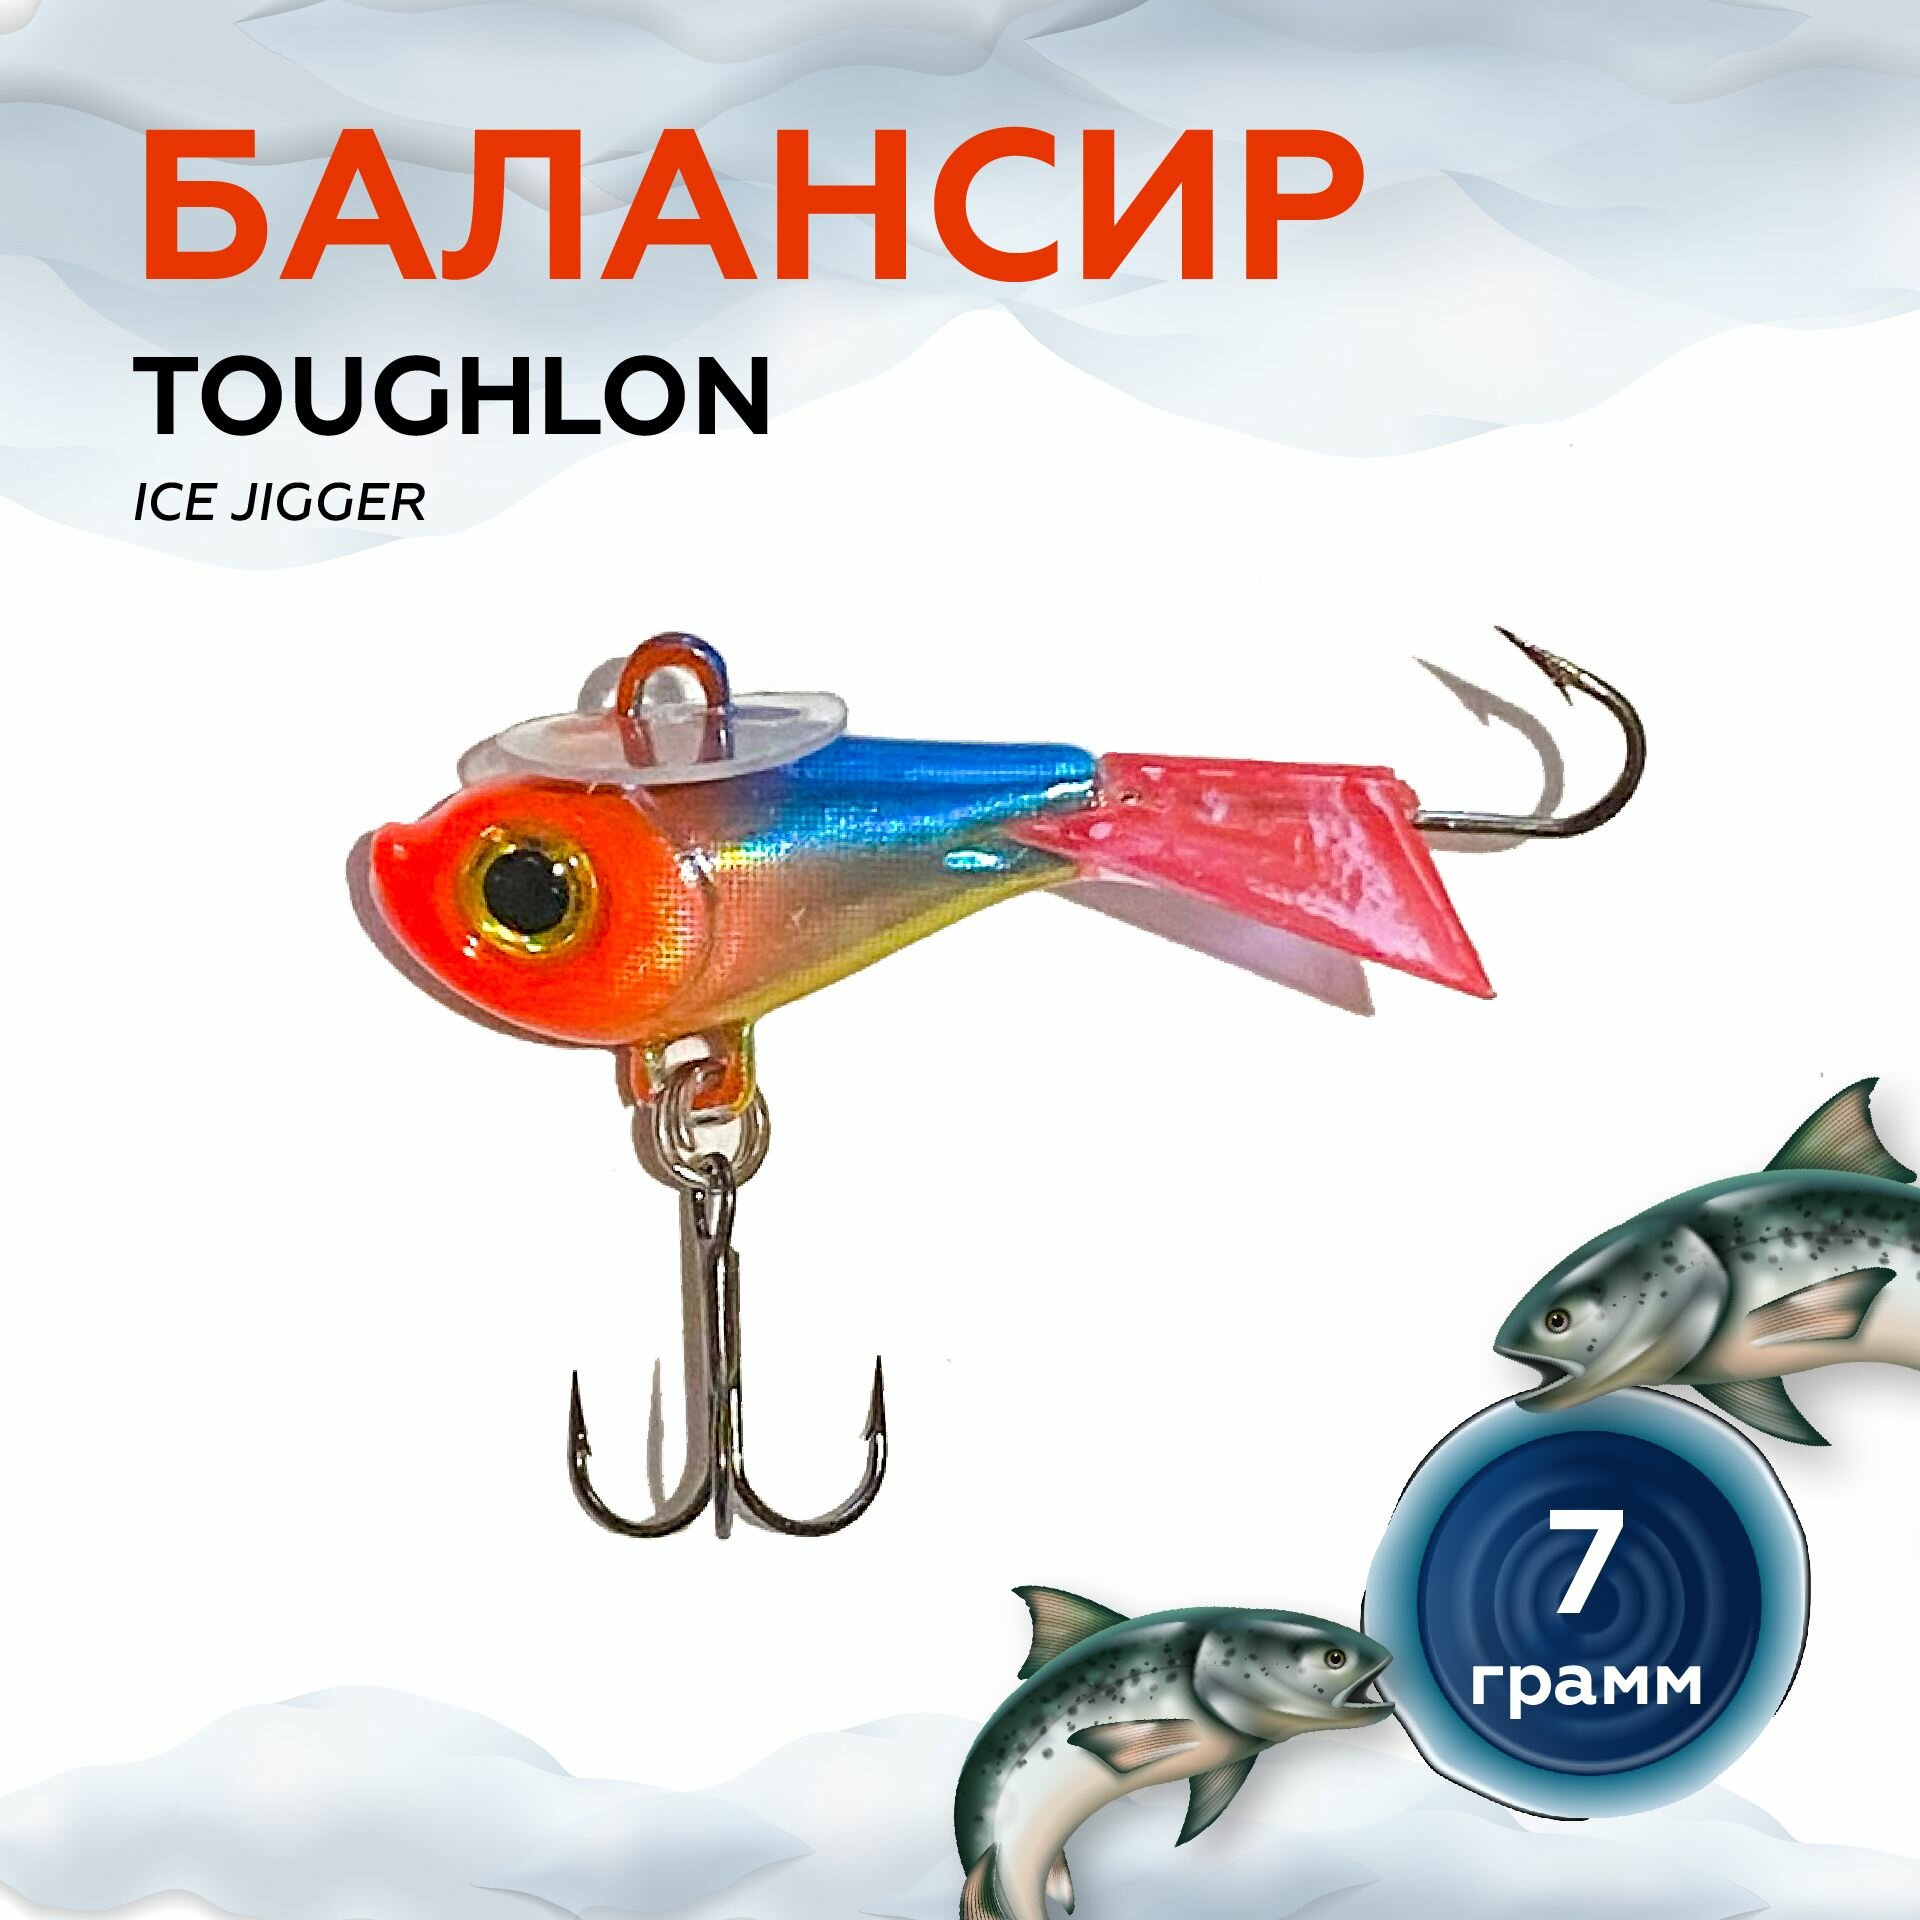 Балансир TOUGHLON ice jigger для зимней рыбалки. Балансир 41 мм, 7 грамм